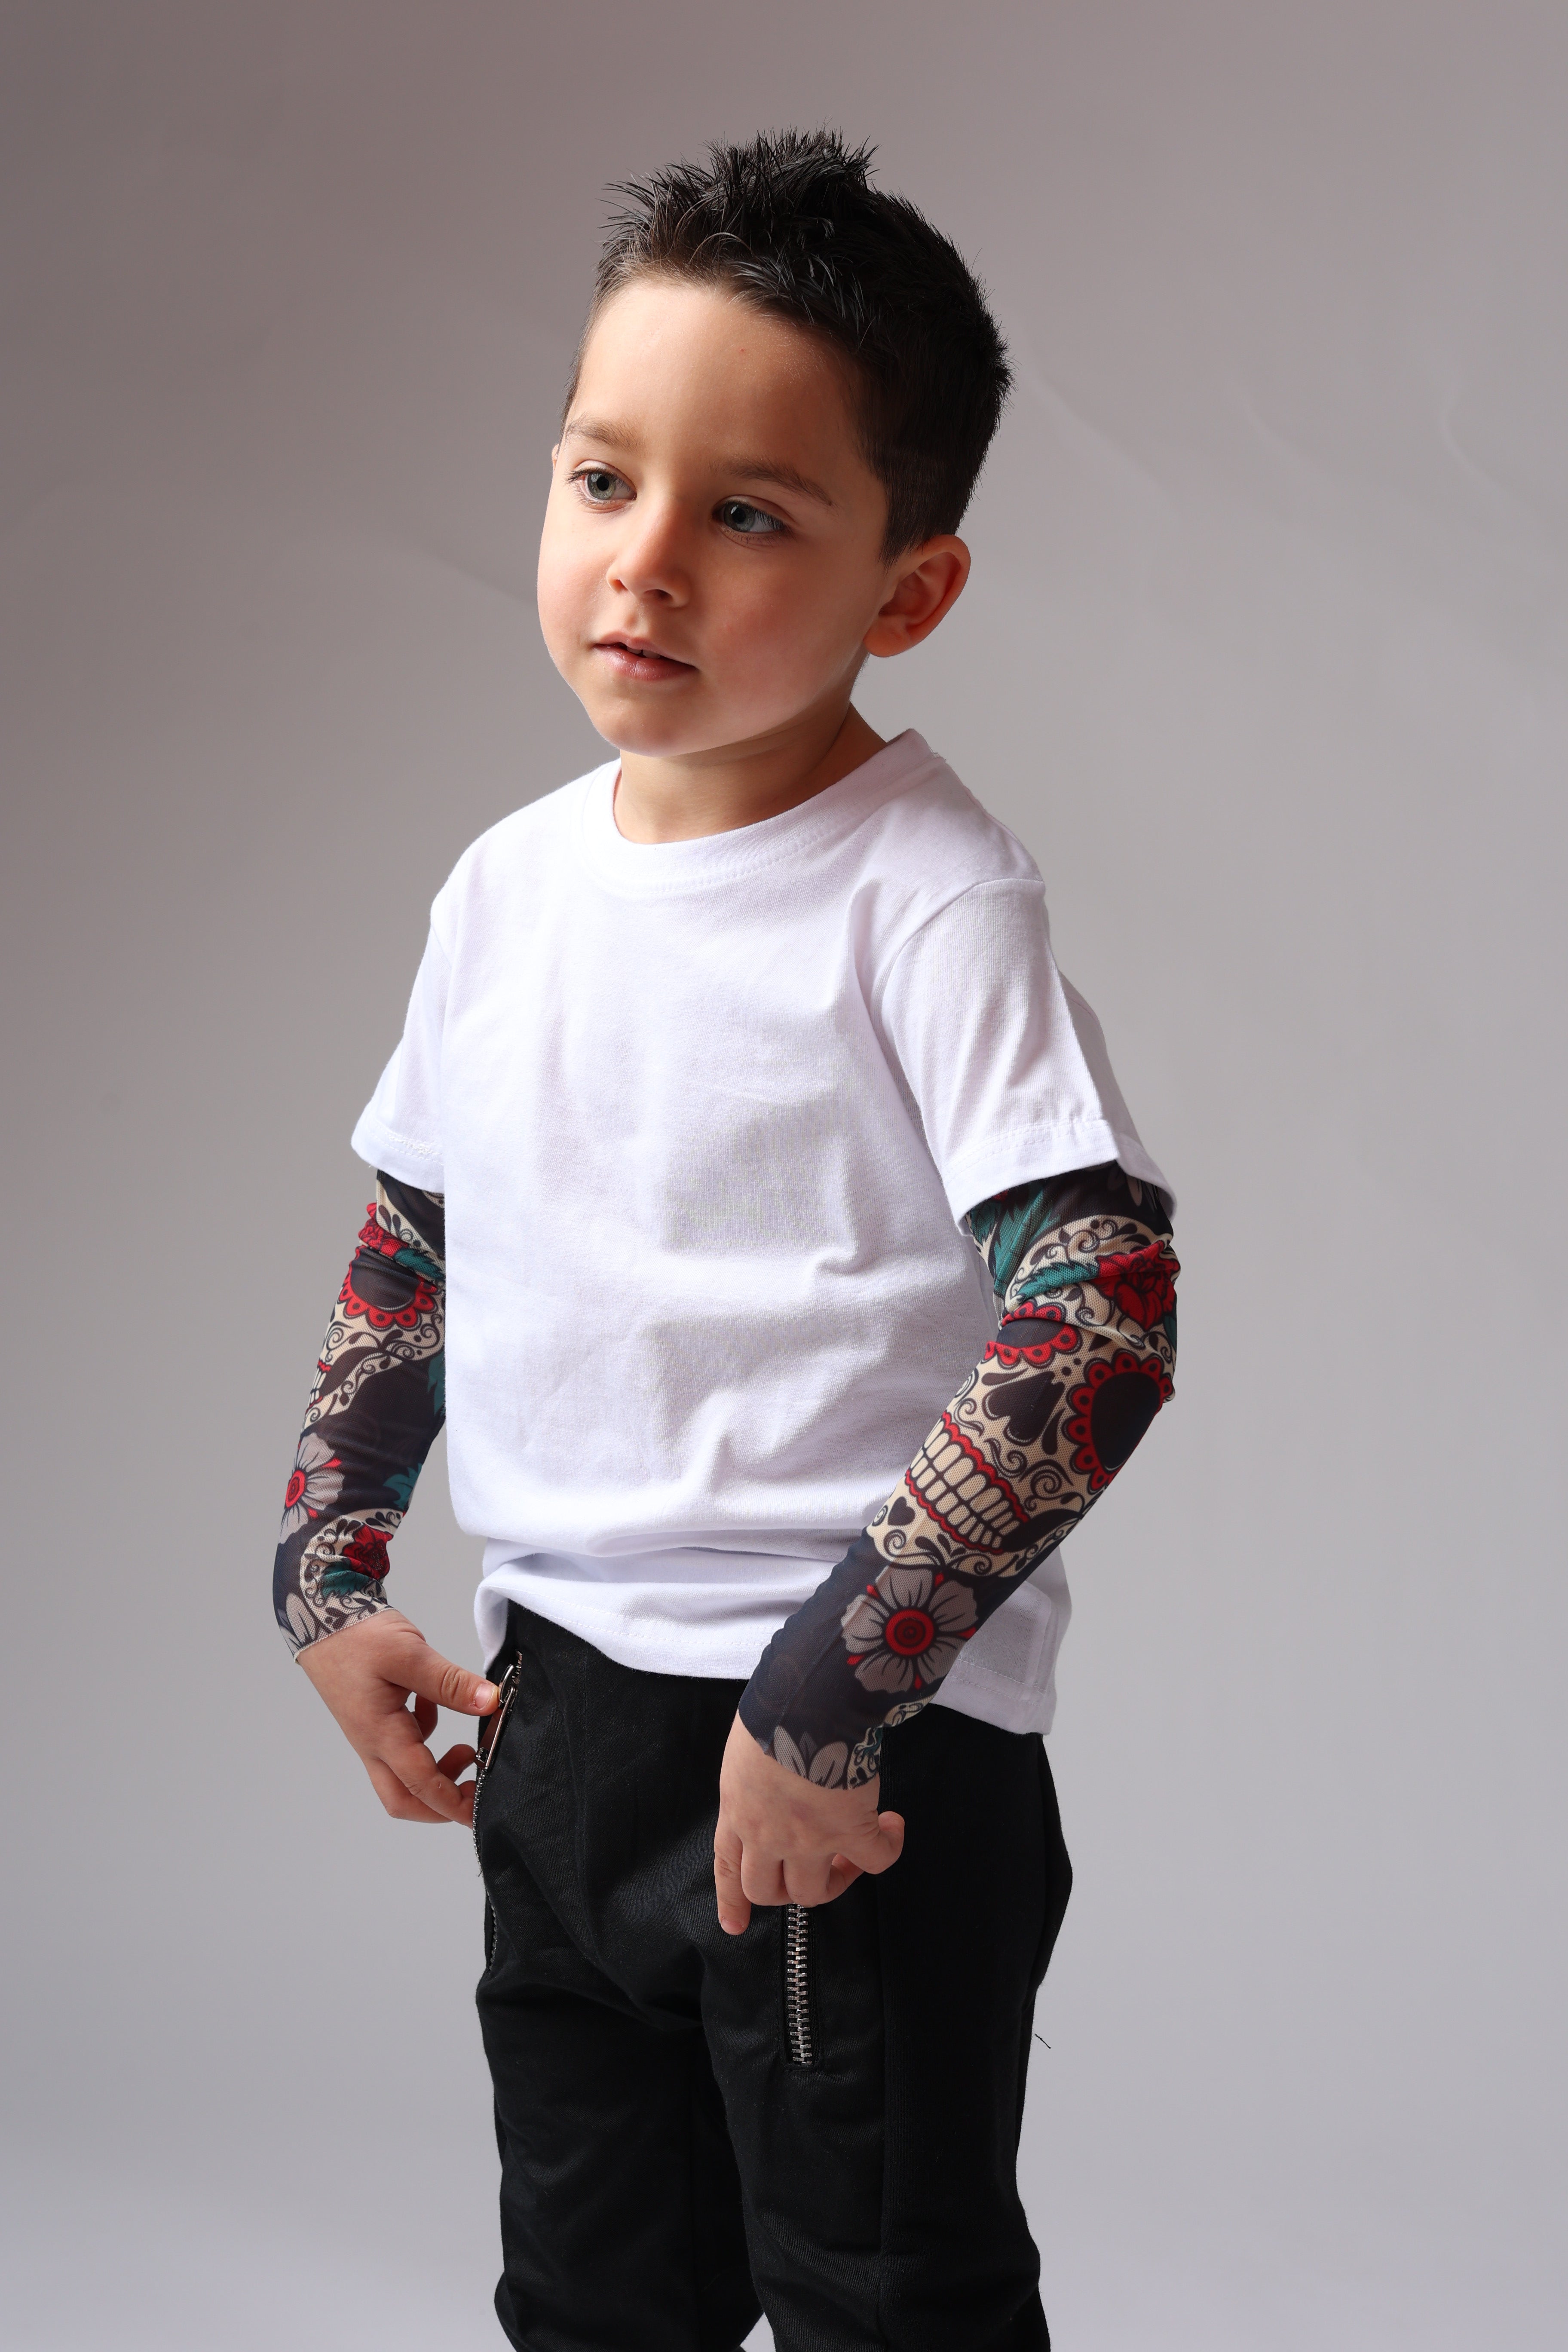 Tricou tatuaje Destiny - unisex pentru copii si adulti - Alb / Negru / Gri / Rosu